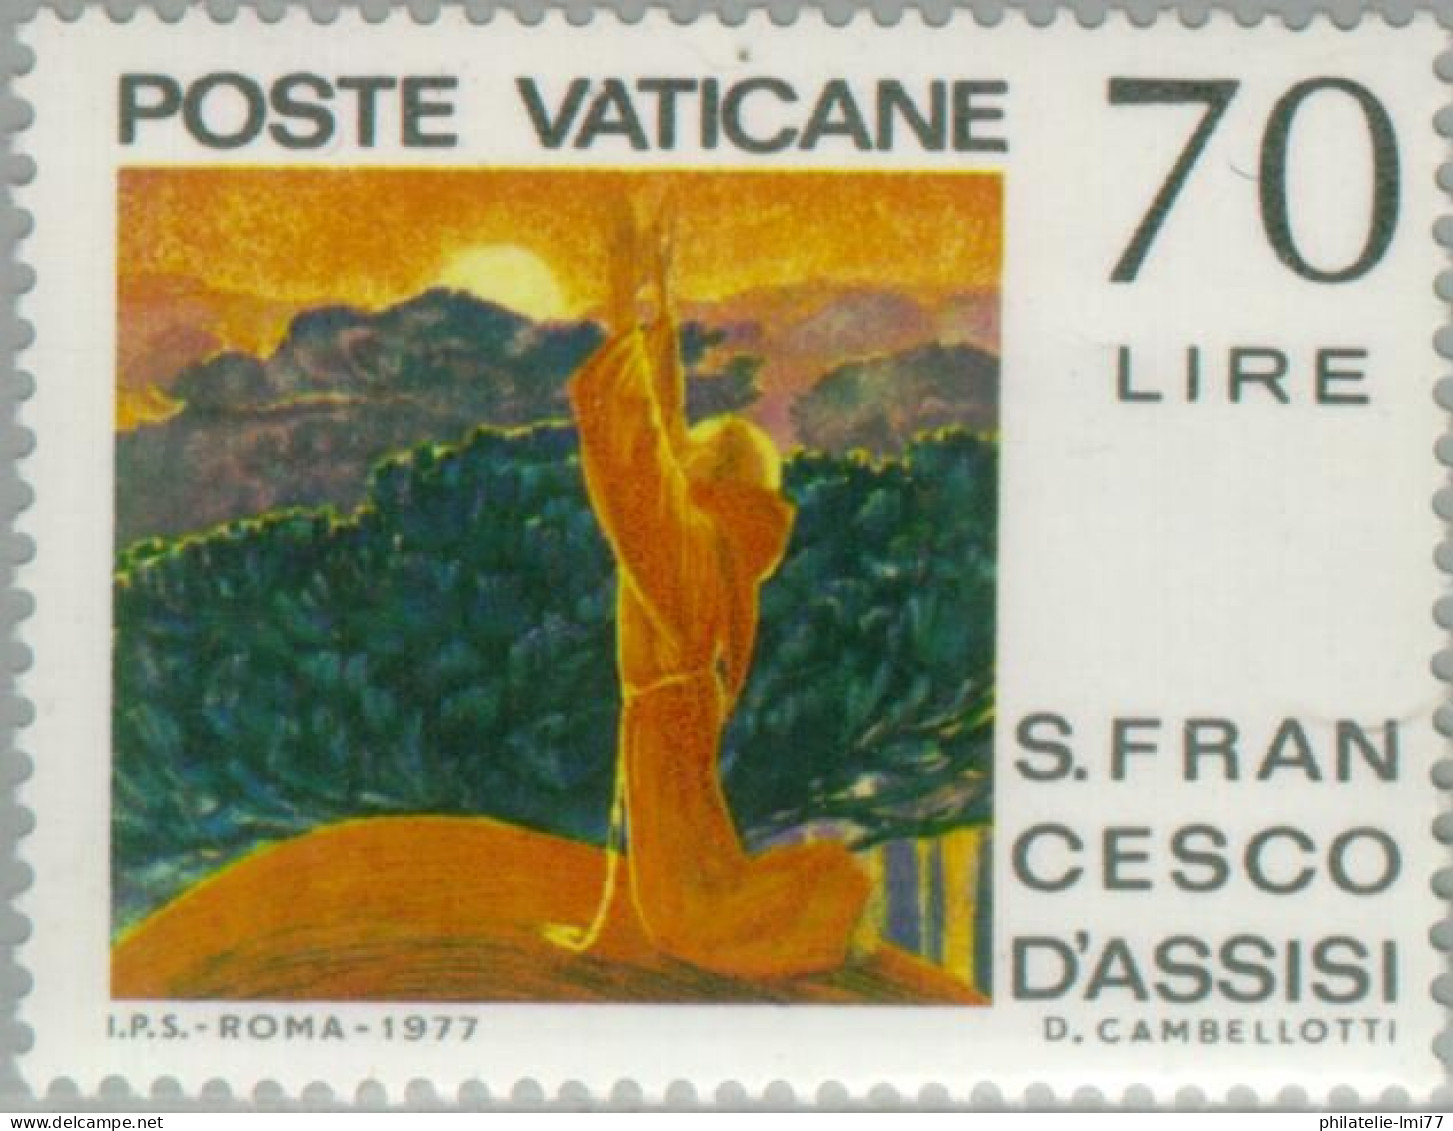 Timbre Du Vatican N° 629 Neuf Sans Charnière - Ungebraucht